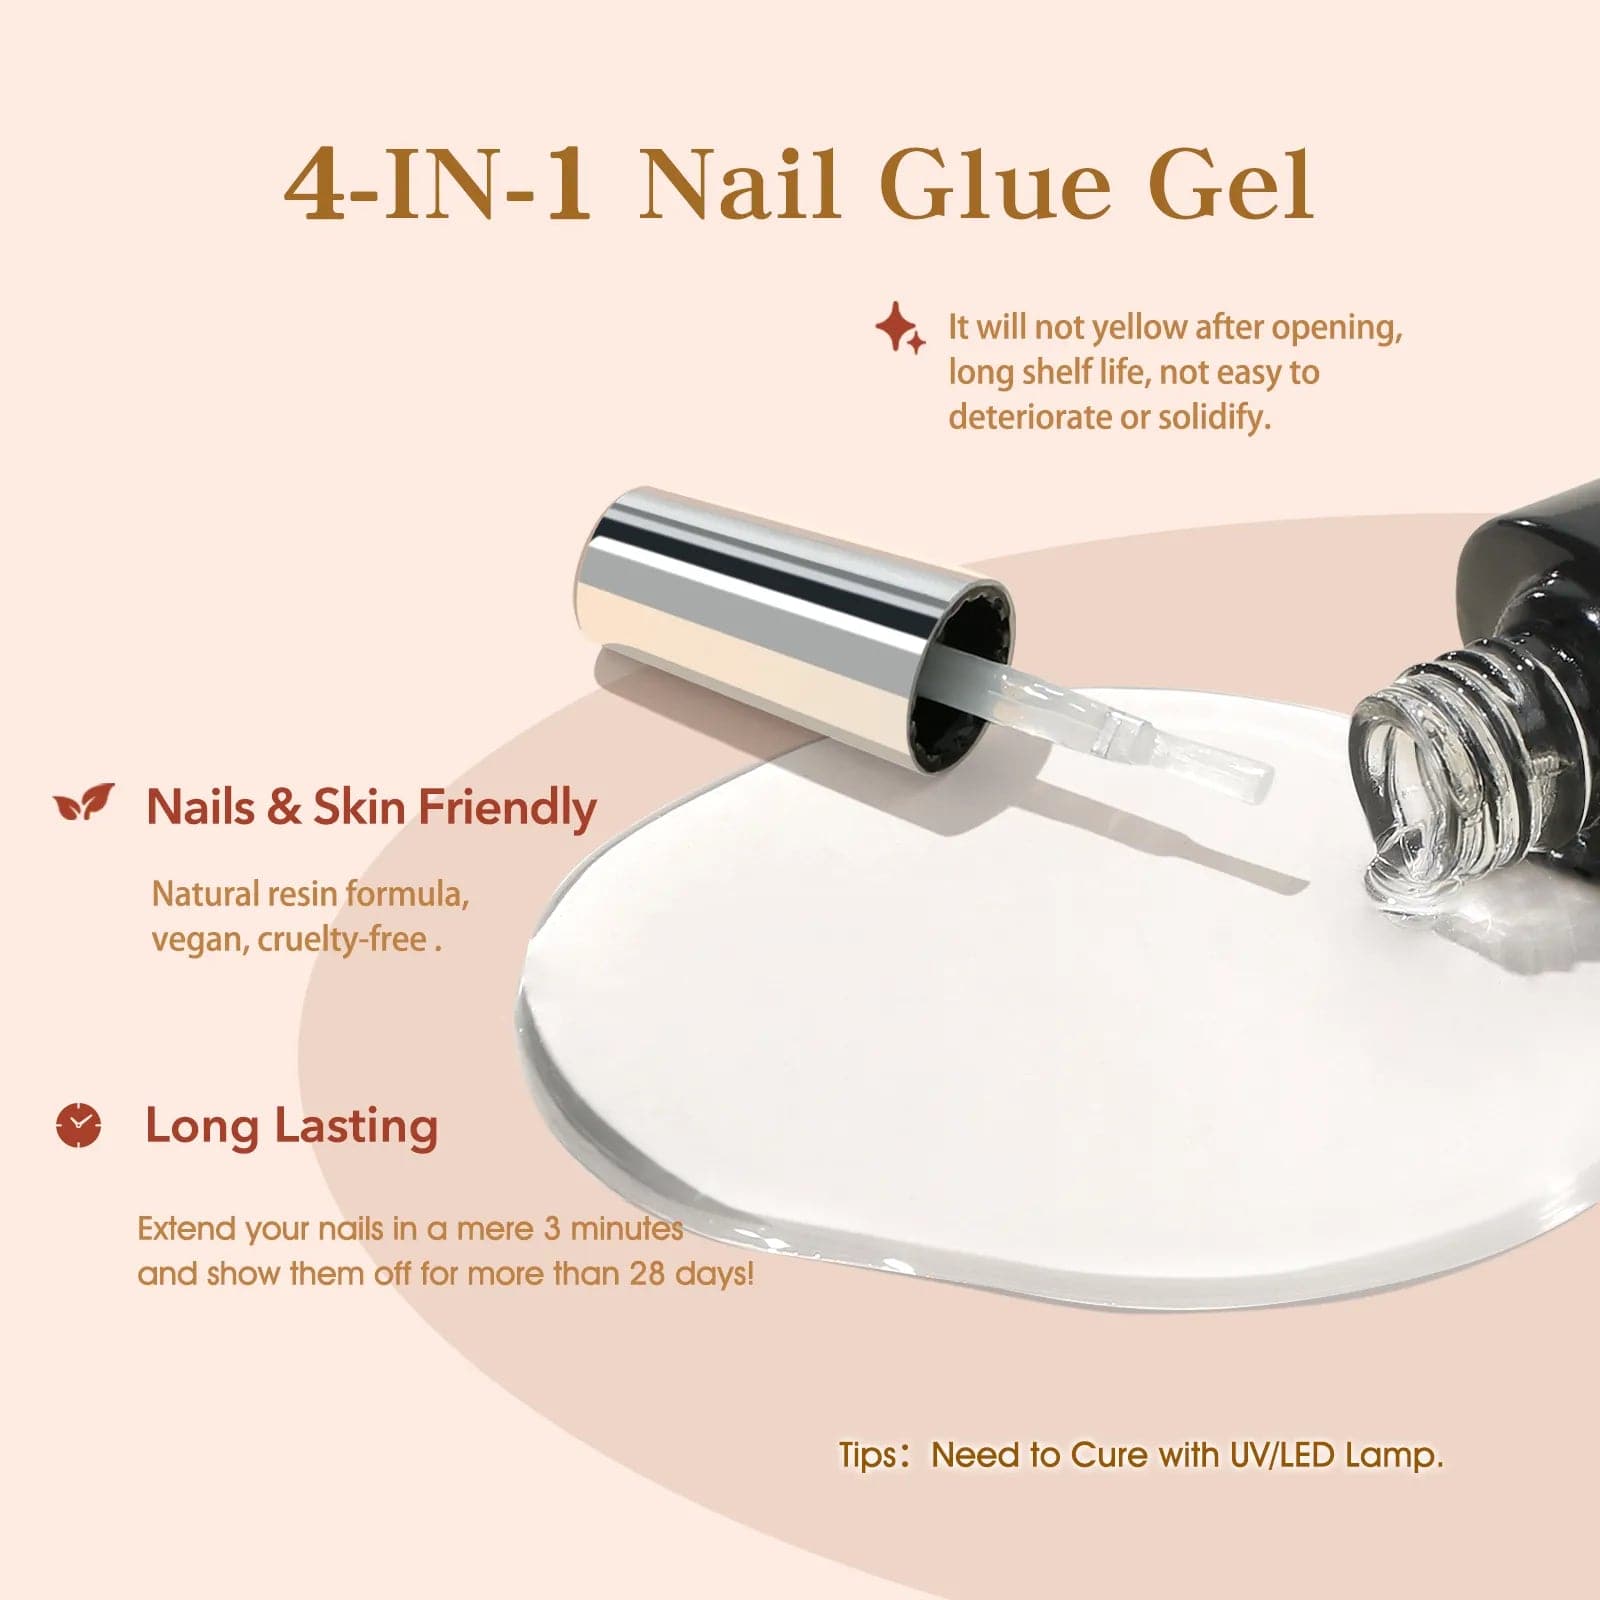 4-In-1 Multi-Functional Nail Glue Gel Nail Extension Enhancement Set